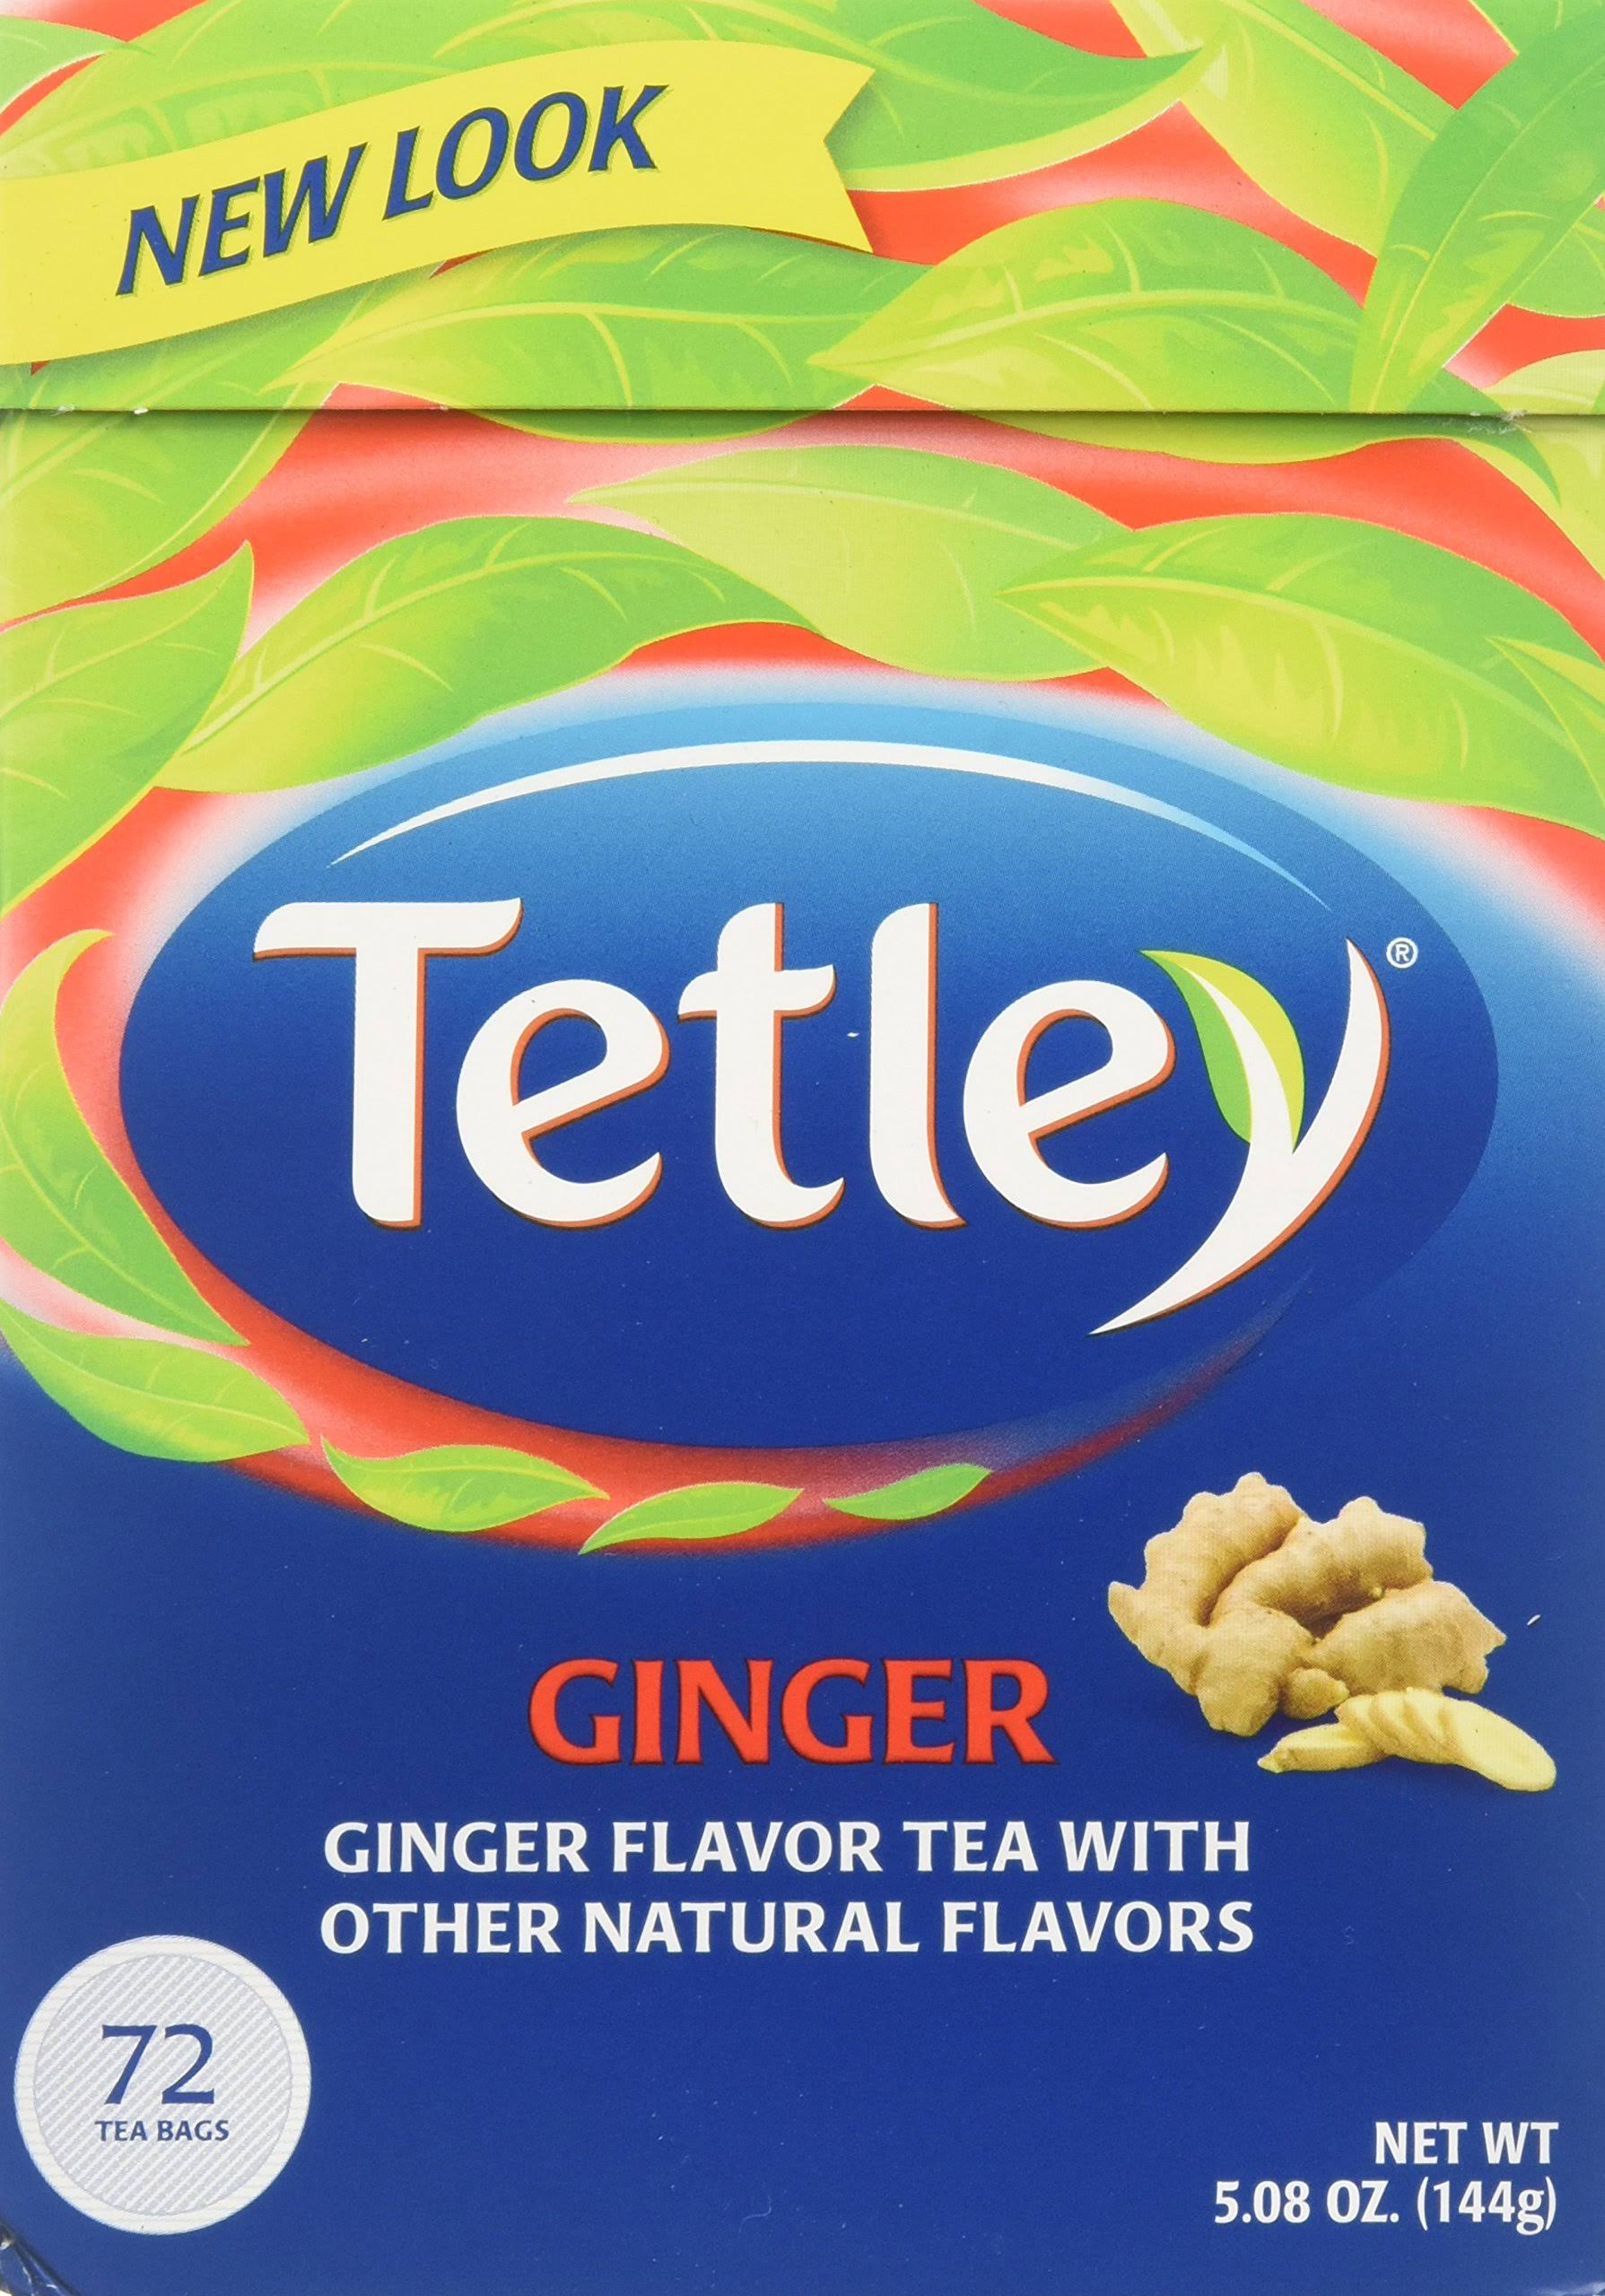 Tetley Tea - Ginger, 72 Tea Bags, 144g